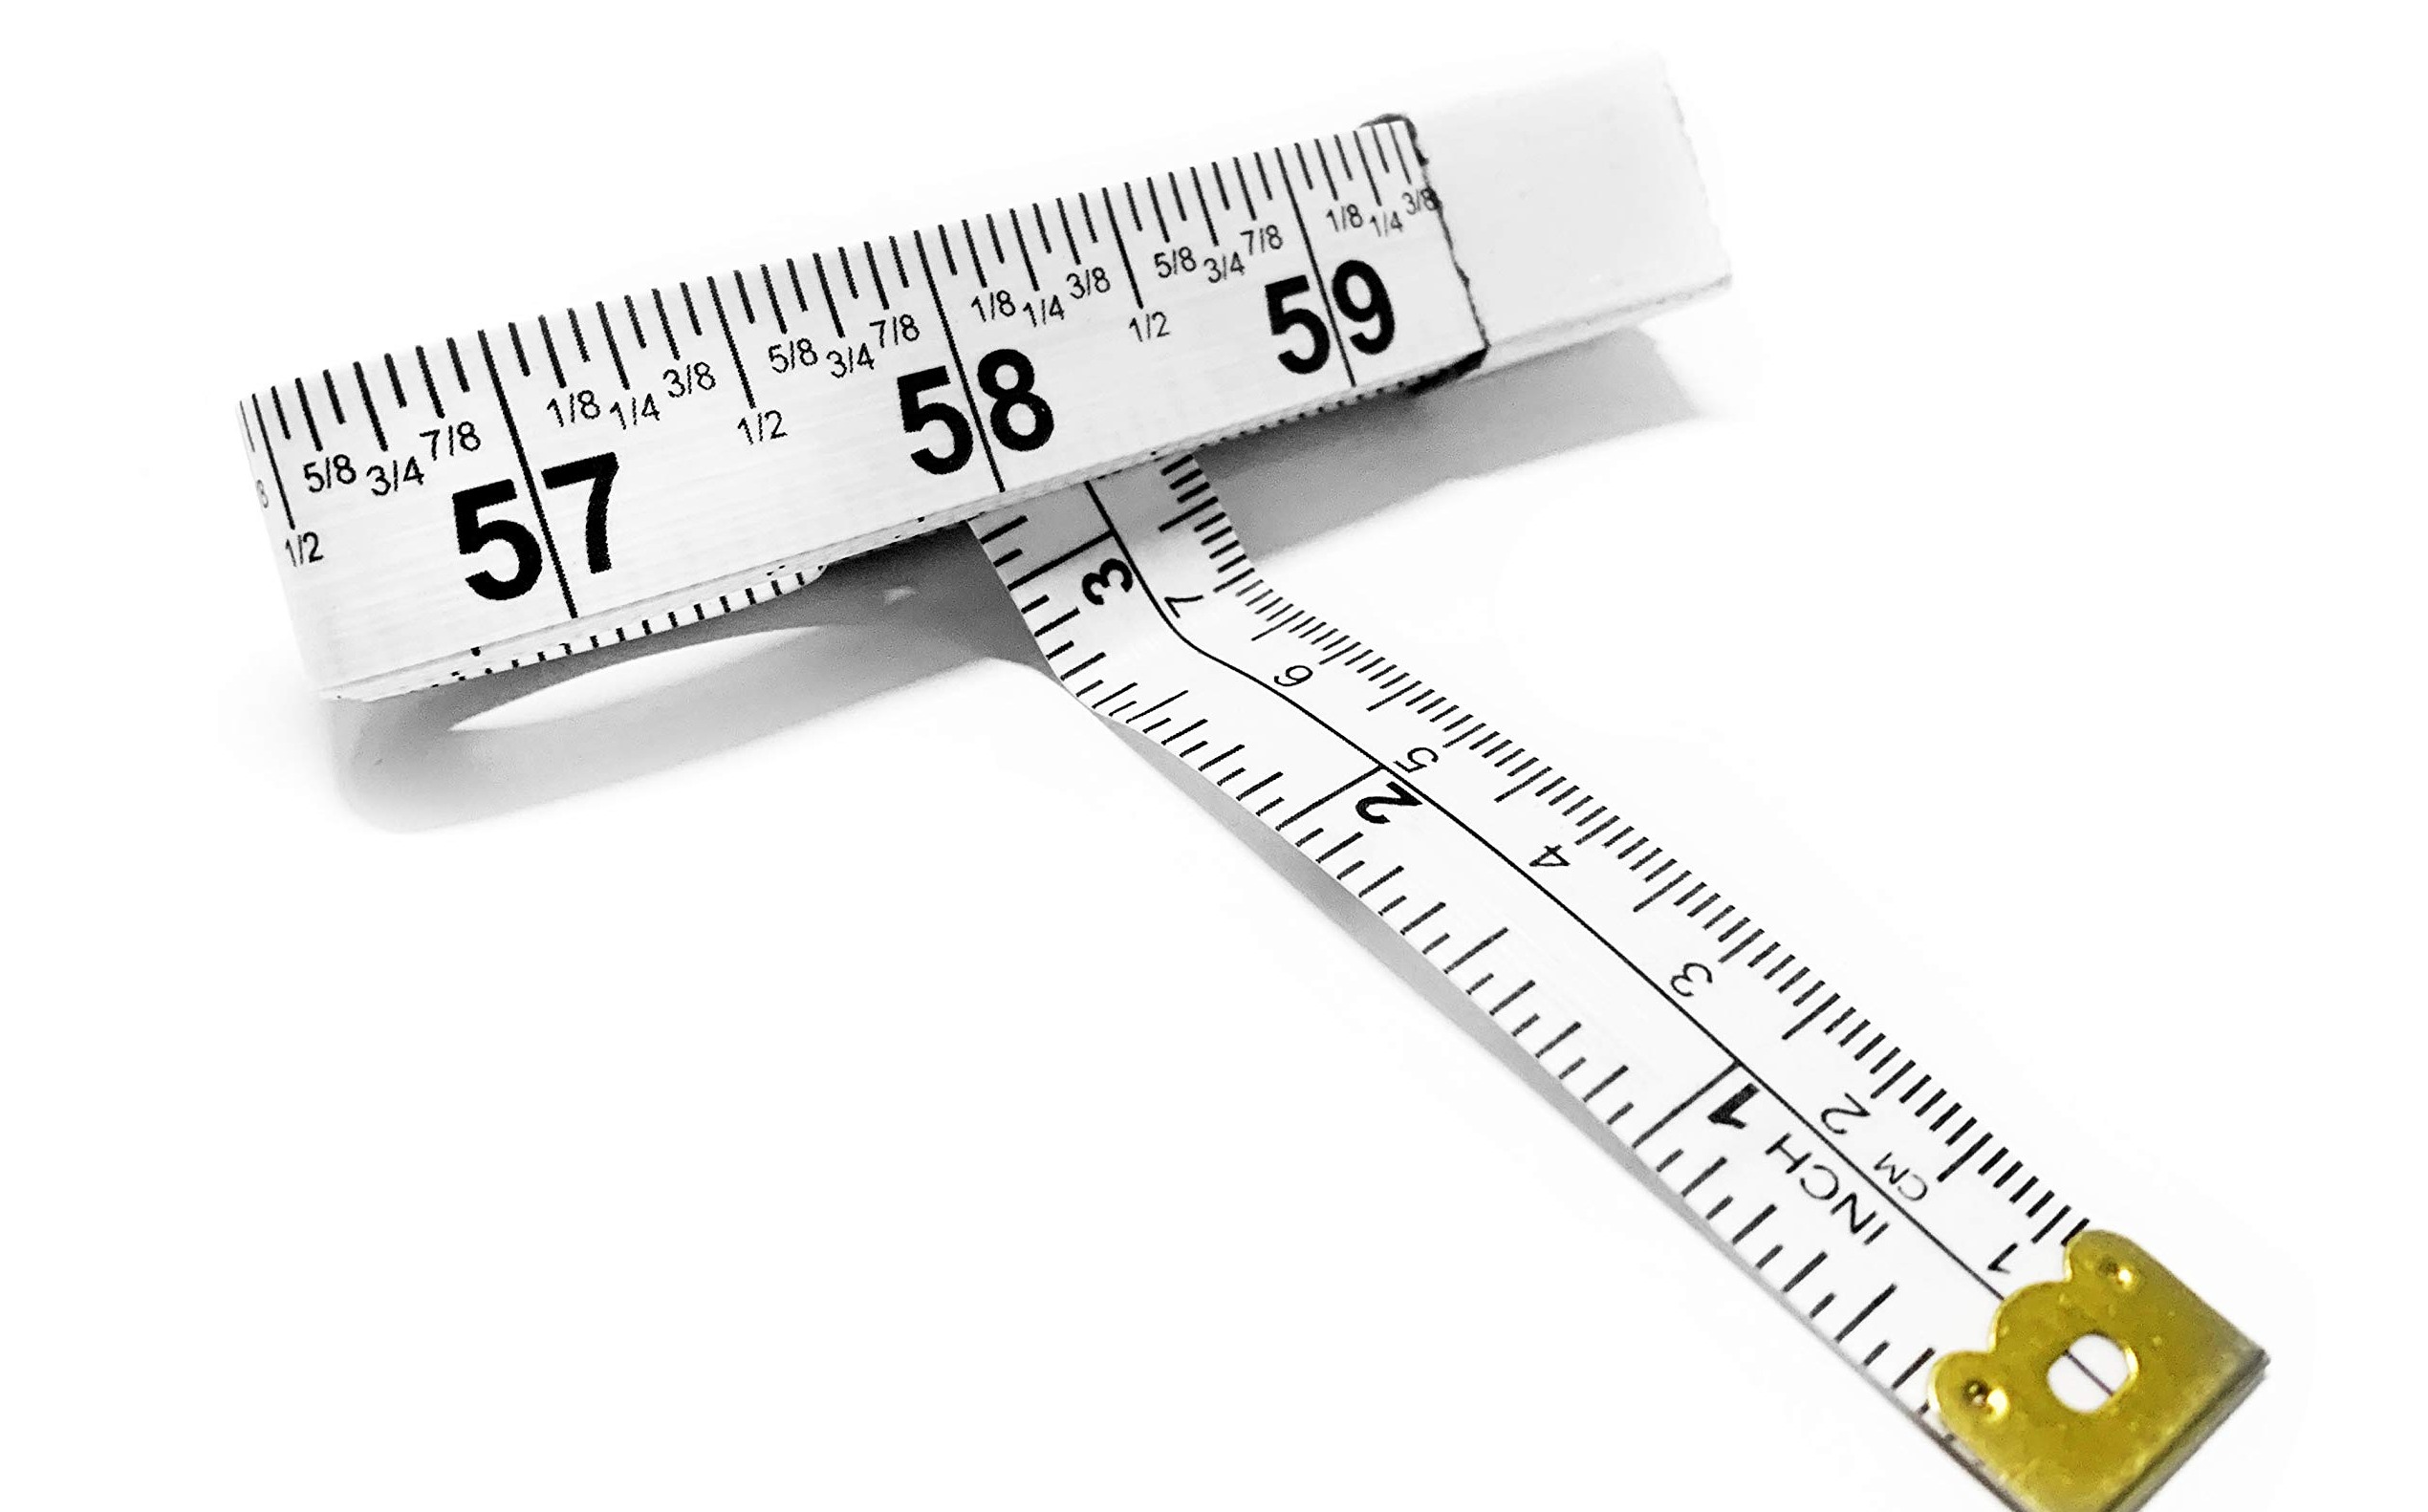 Essential Tool- Measuring Tape or Ruler